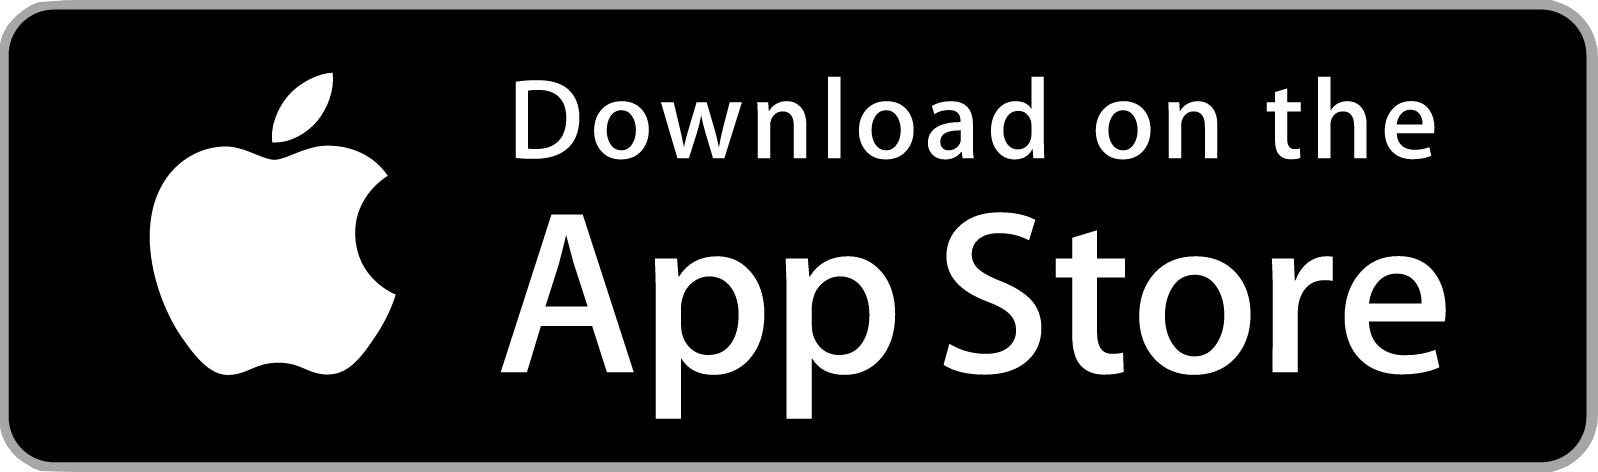 BistroChat App Store